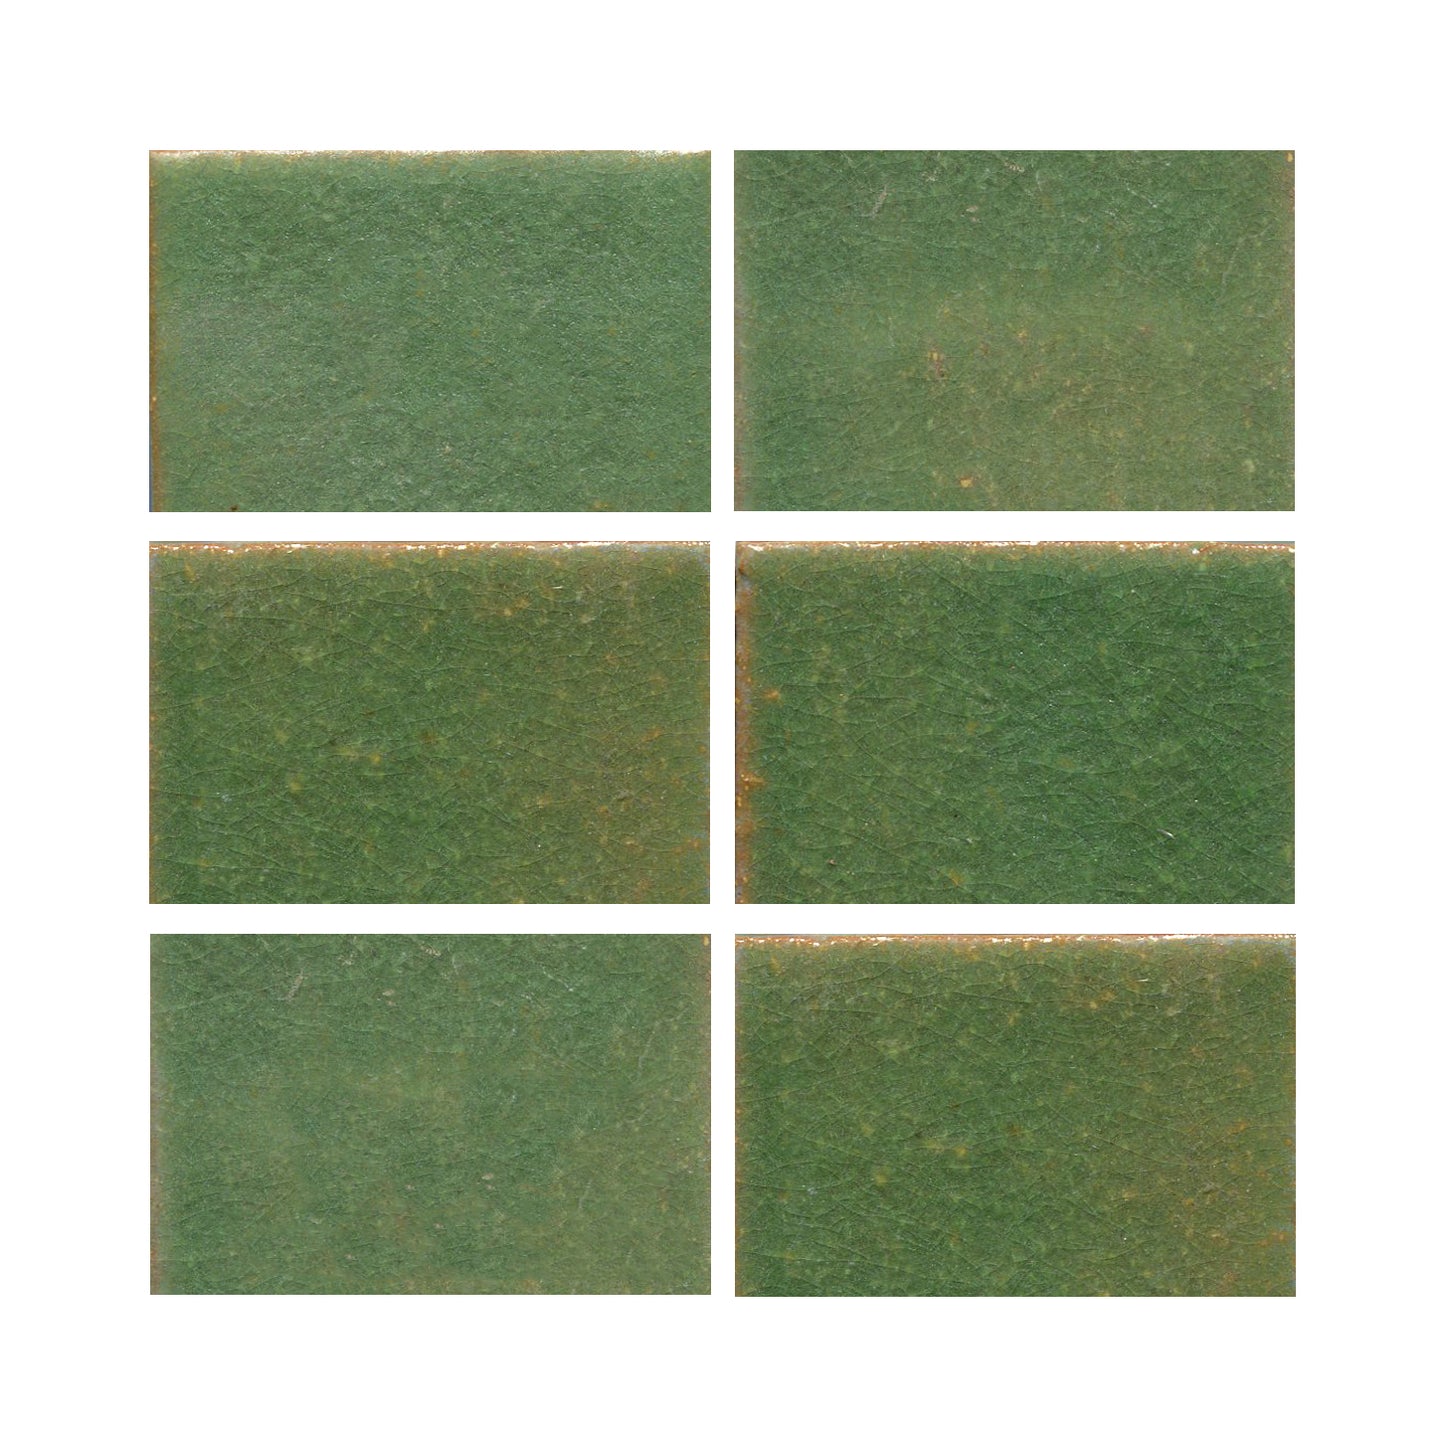 Avocado green 3x4 field tile